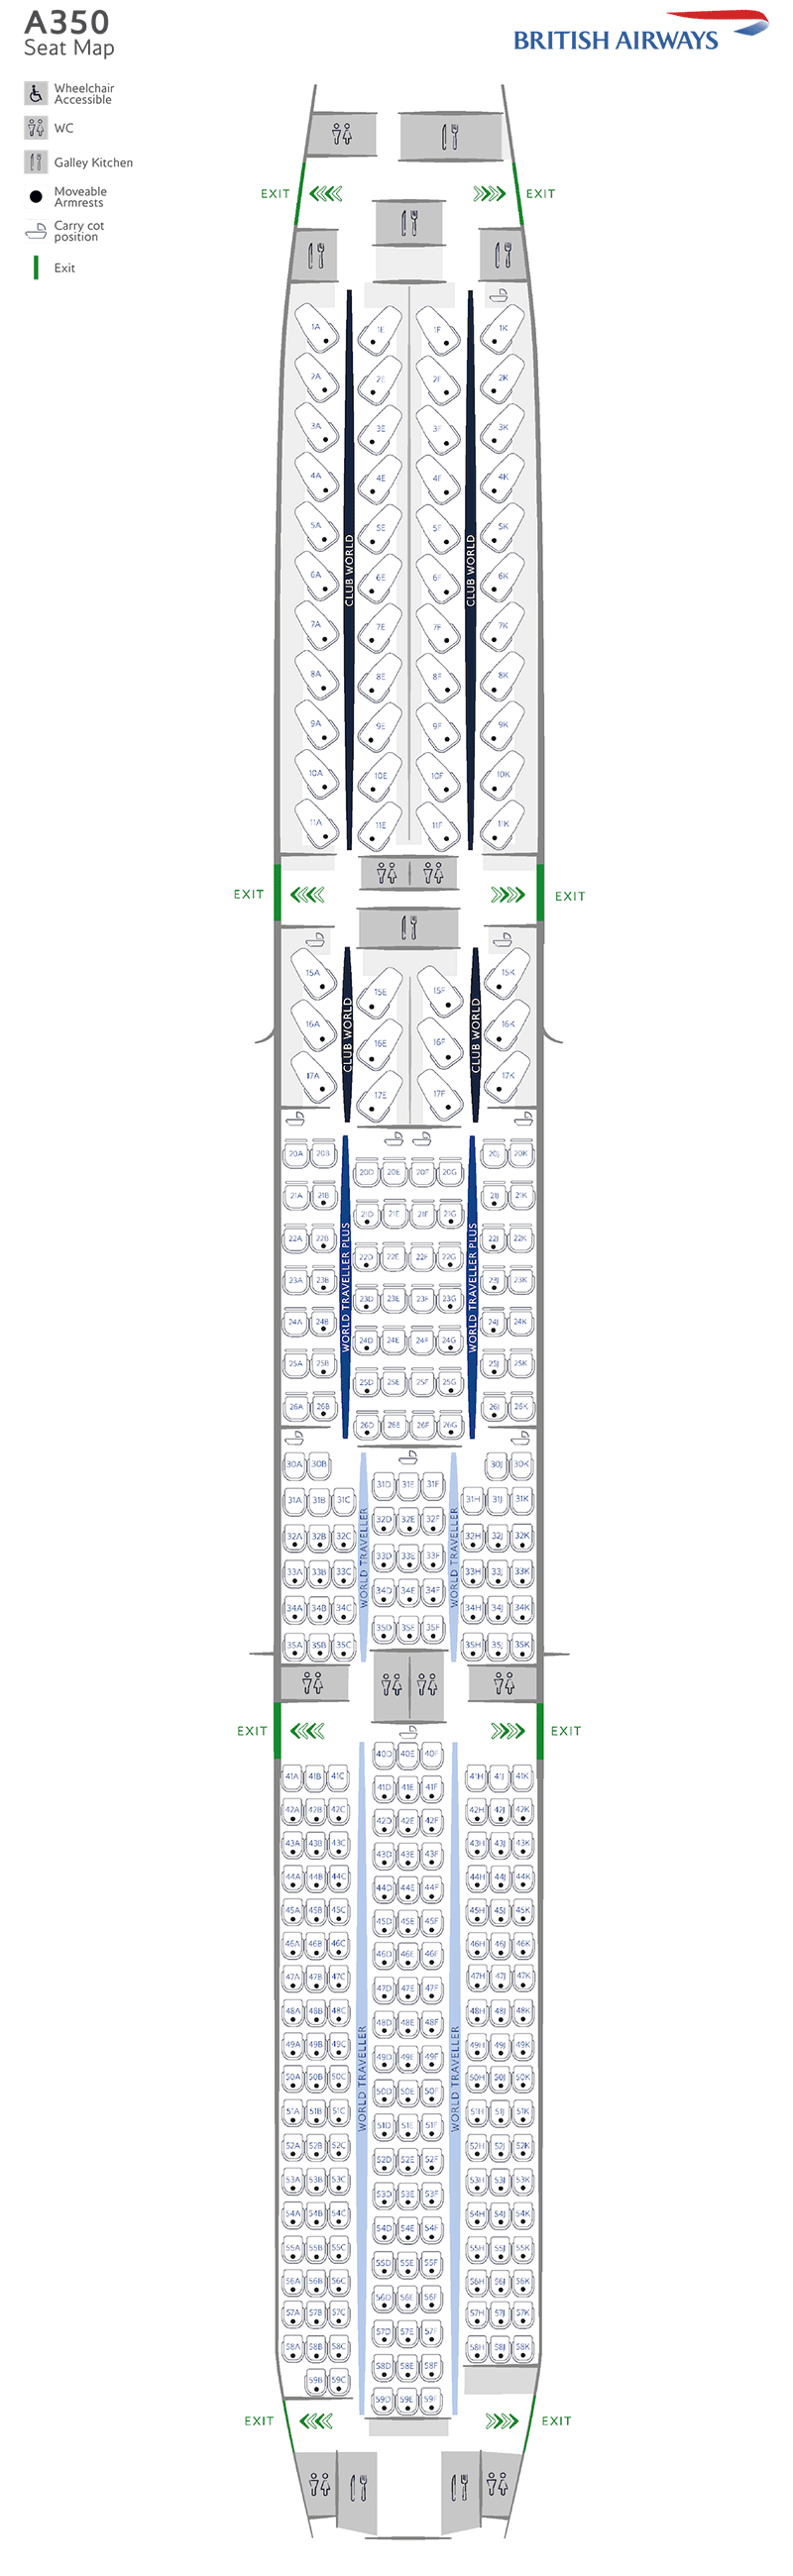 A350 full seatmap